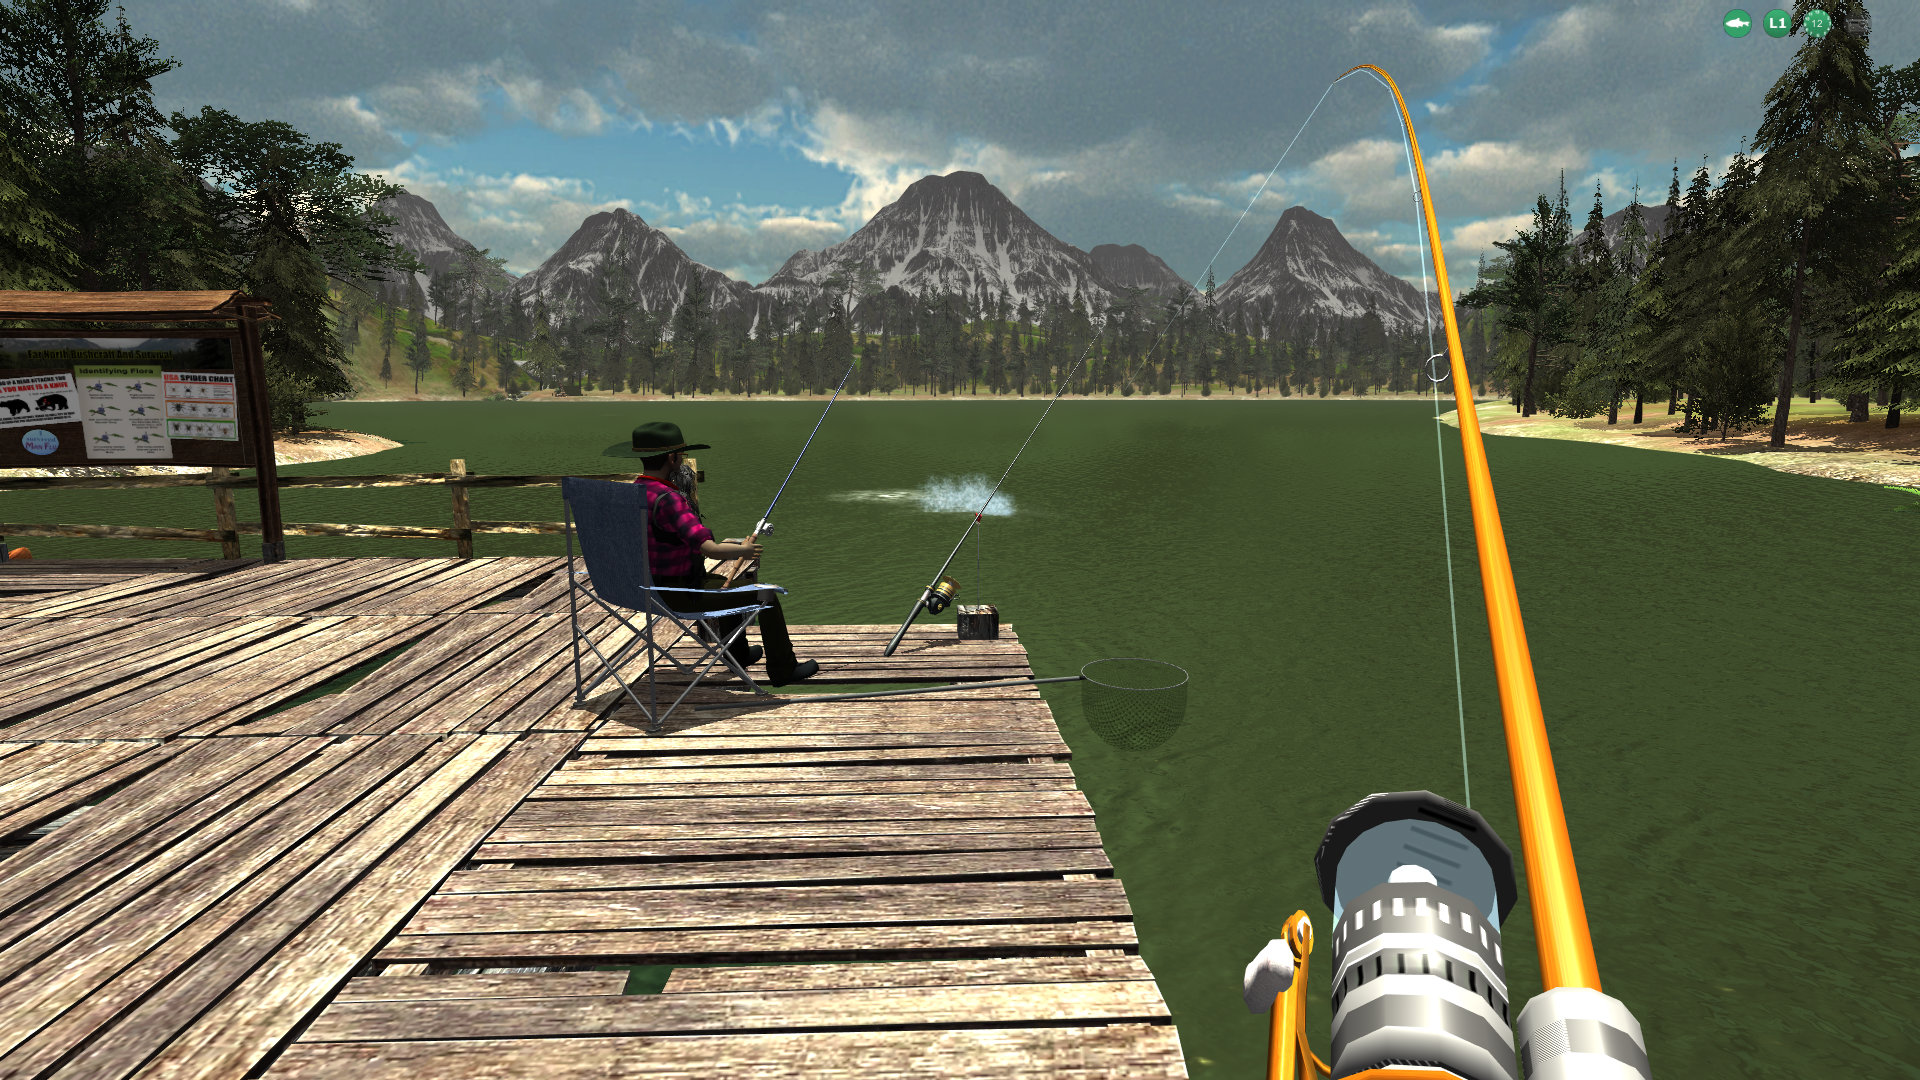 Worldwide Sports Fishing screenshot